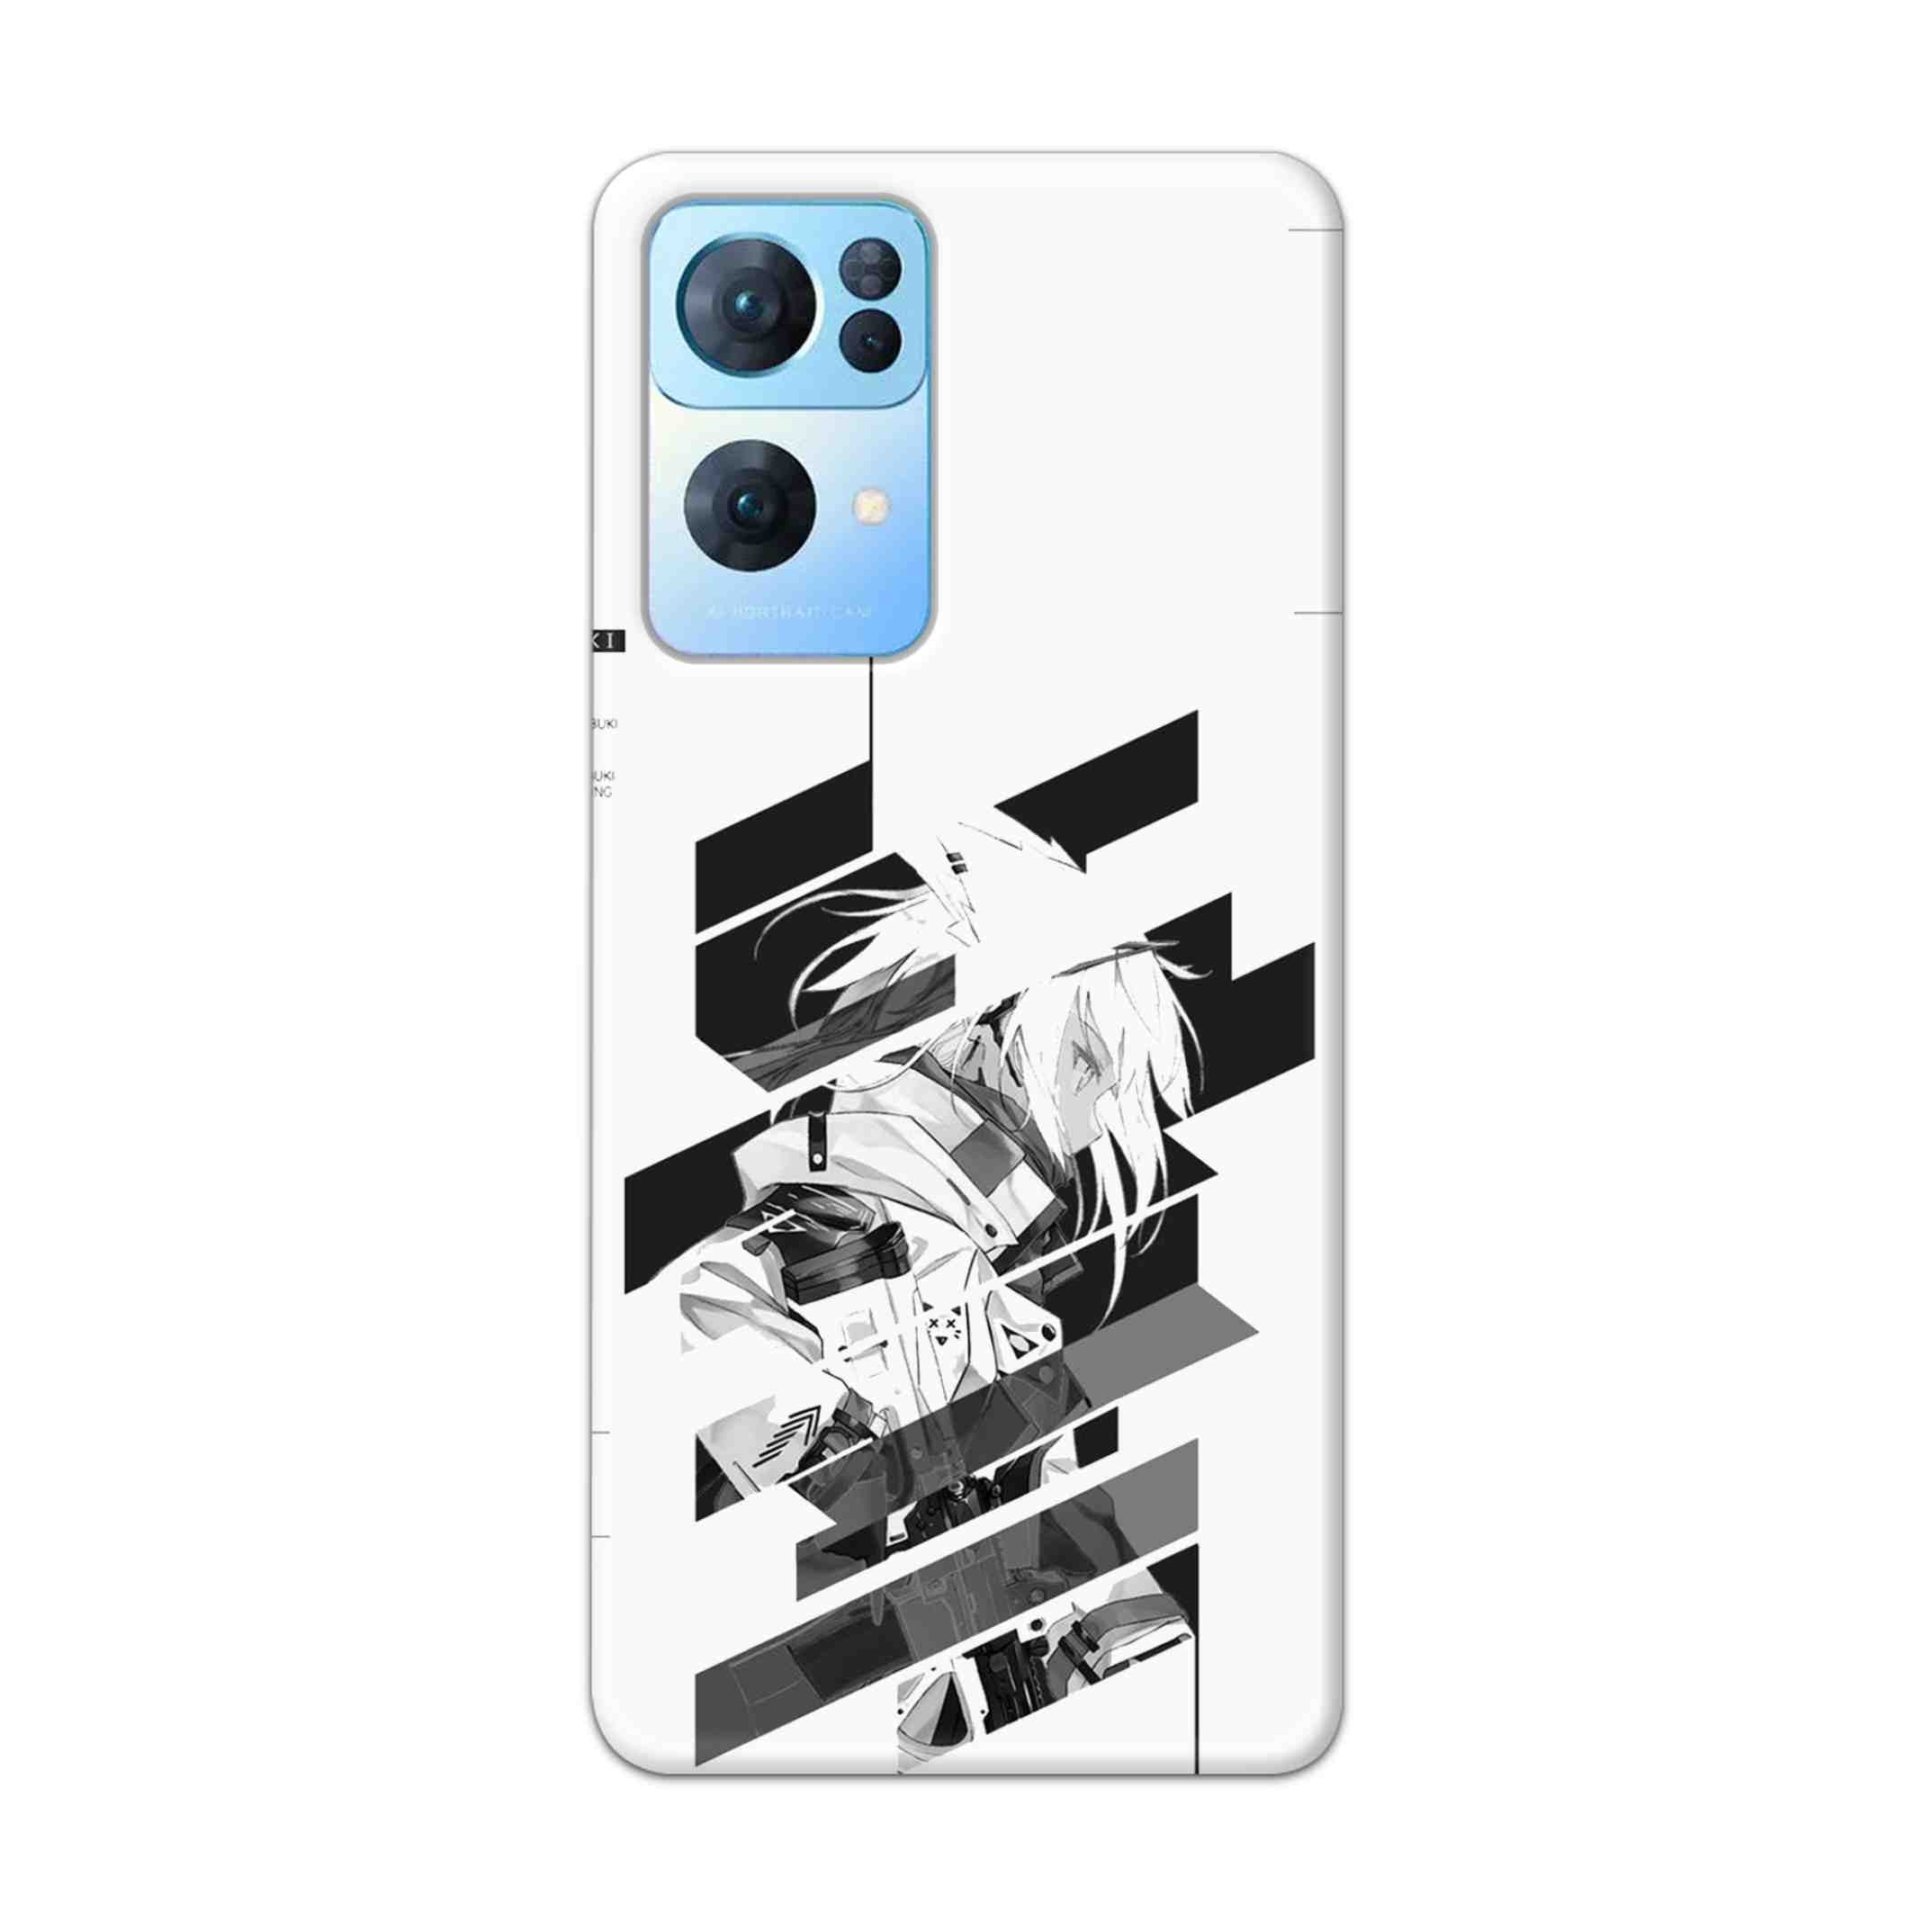 Buy Fubuki Hard Back Mobile Phone Case Cover For Oppo Reno 7 Pro Online